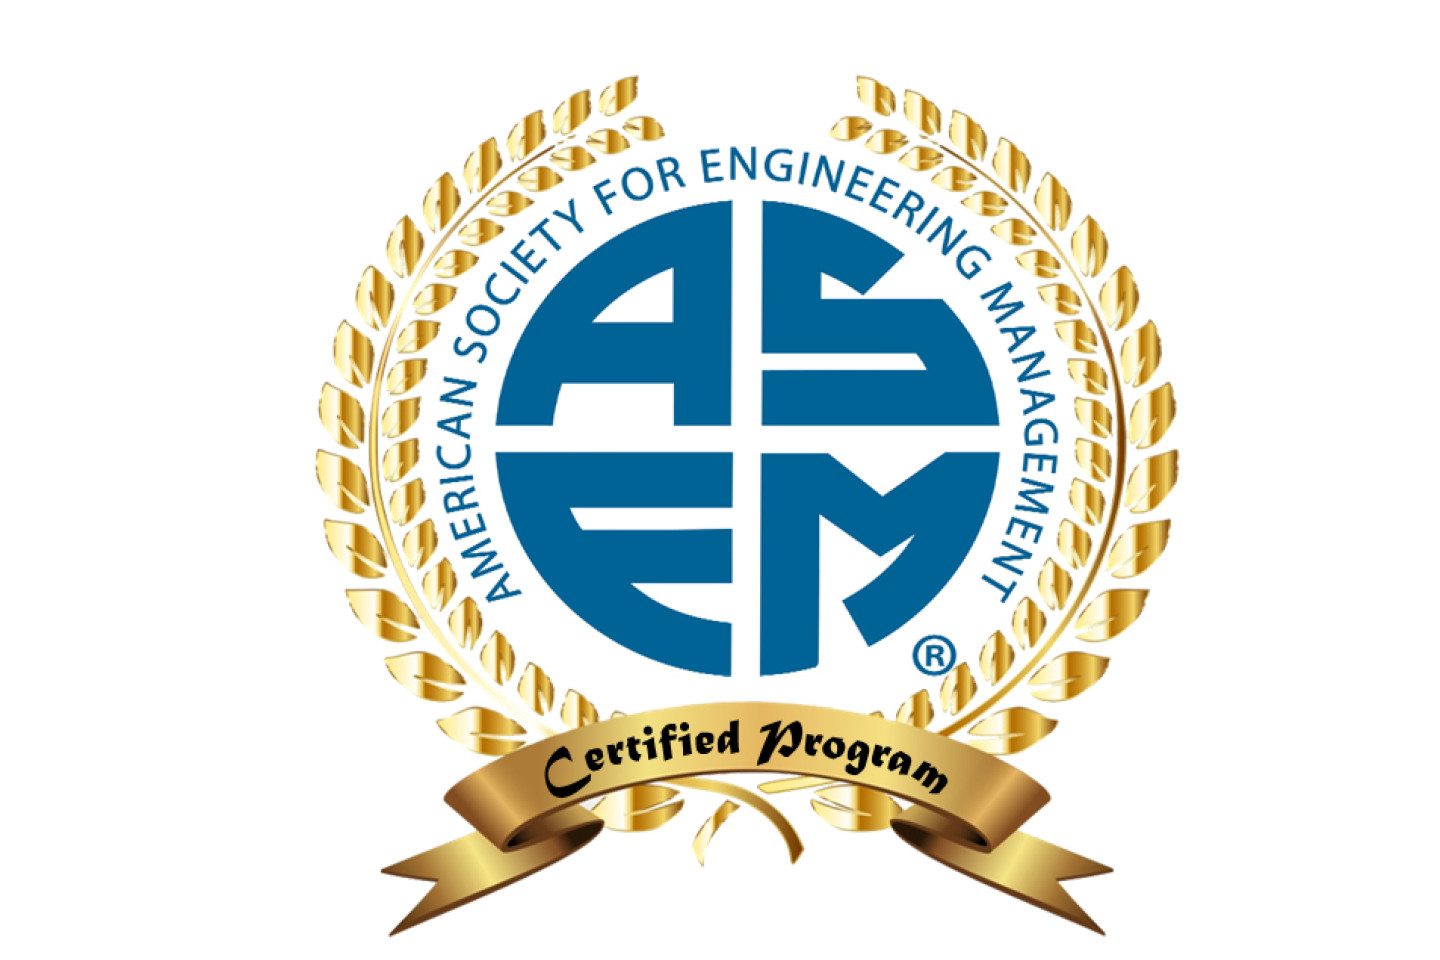 American Society of Engineering Management accreditation logo